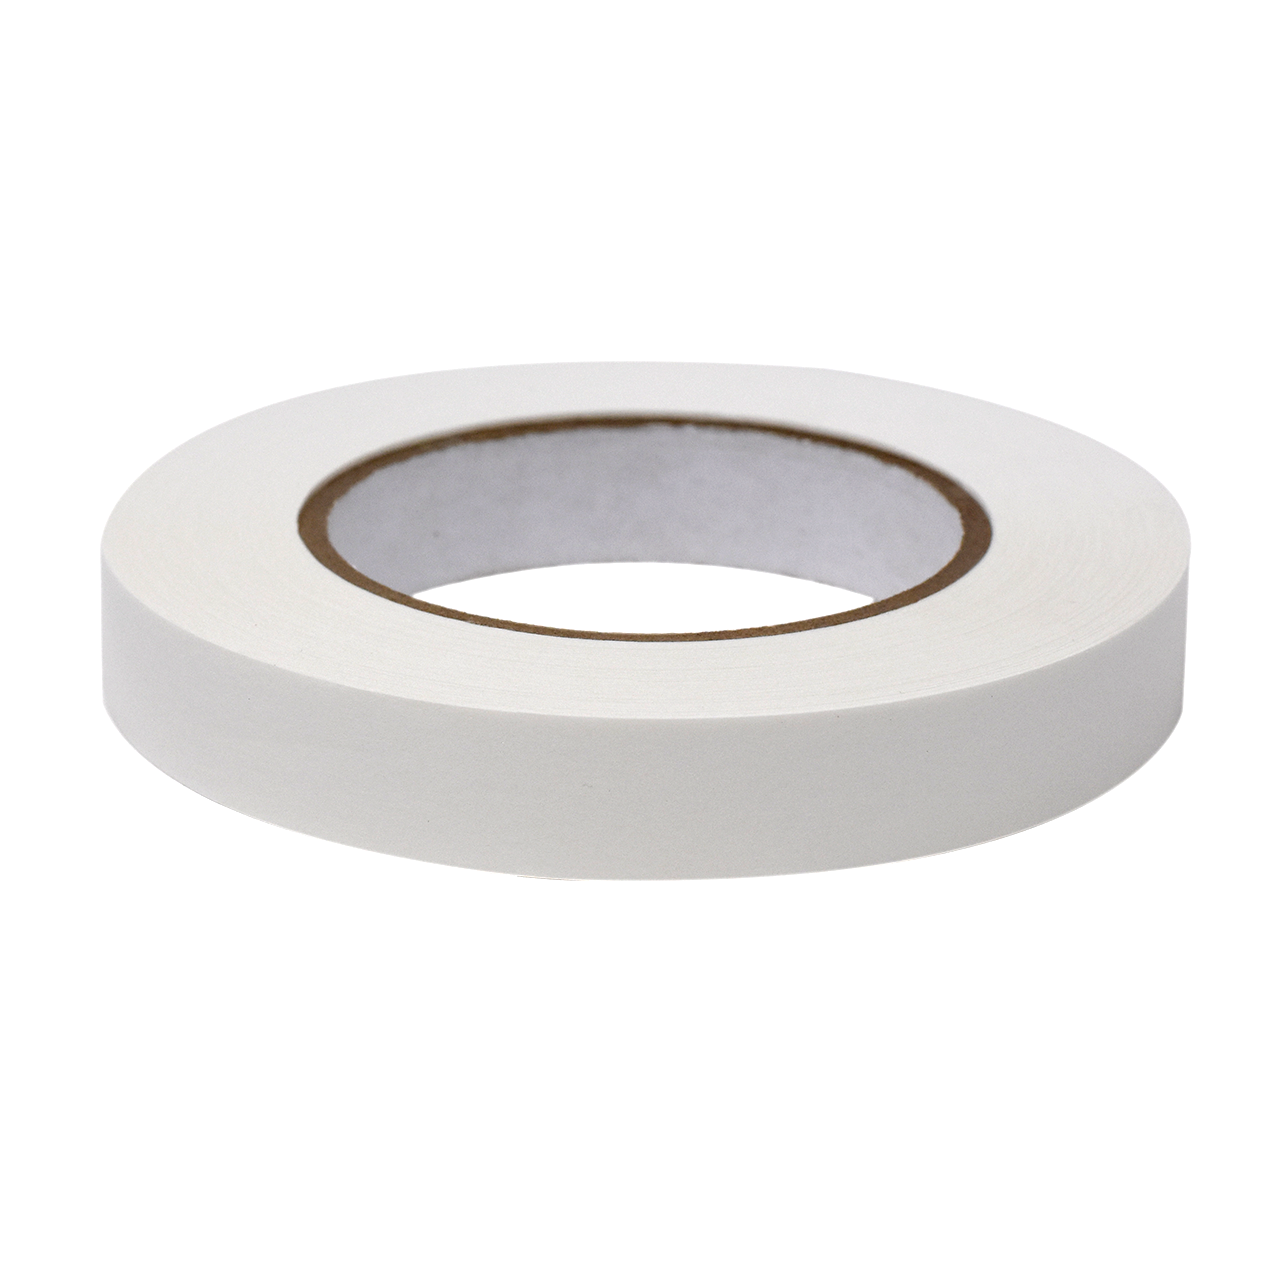 Globe Scientific Labeling Tape, 3/4" x 60yd per Roll, 4 Rolls/Case, White  